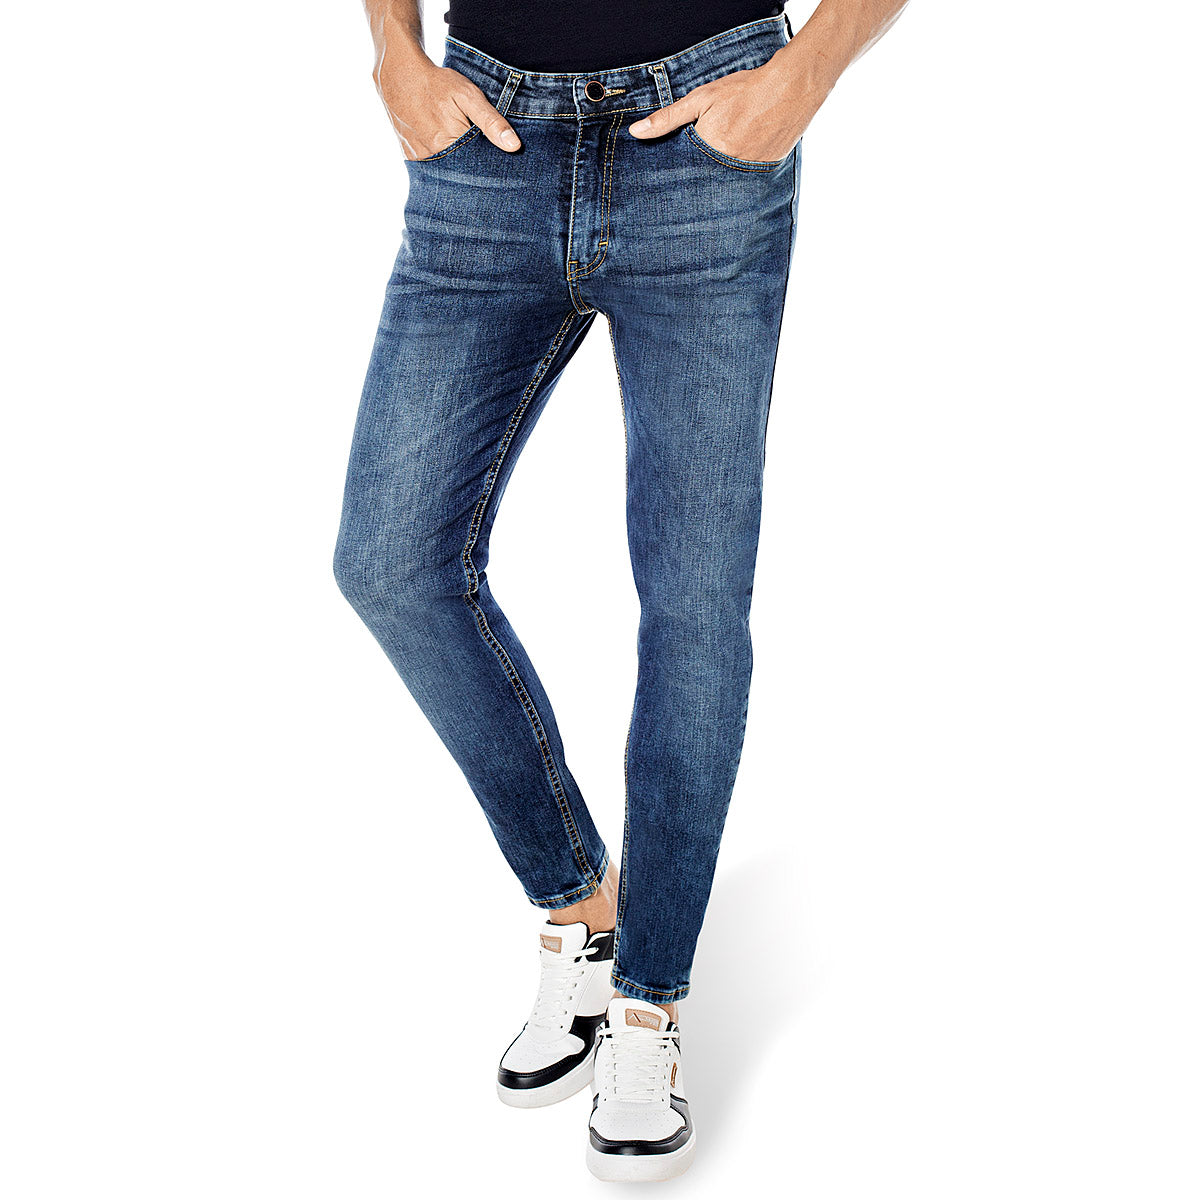 Pakar.com - Mayo: Regalos para mamá | Jeans para hombre cod-121676